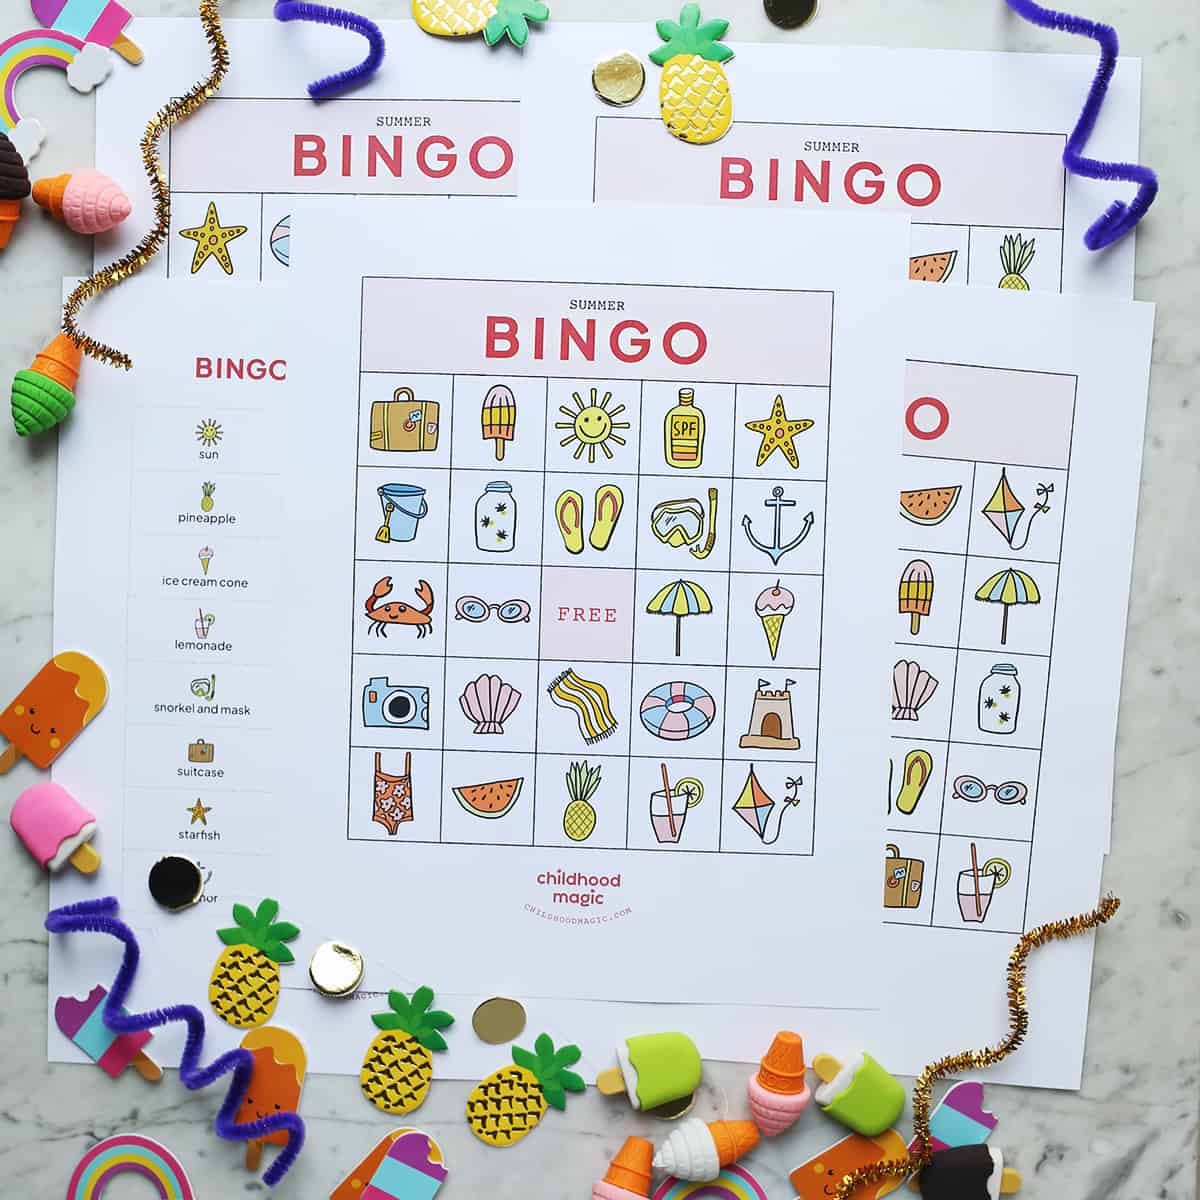 summer-themed bingo cards on table.